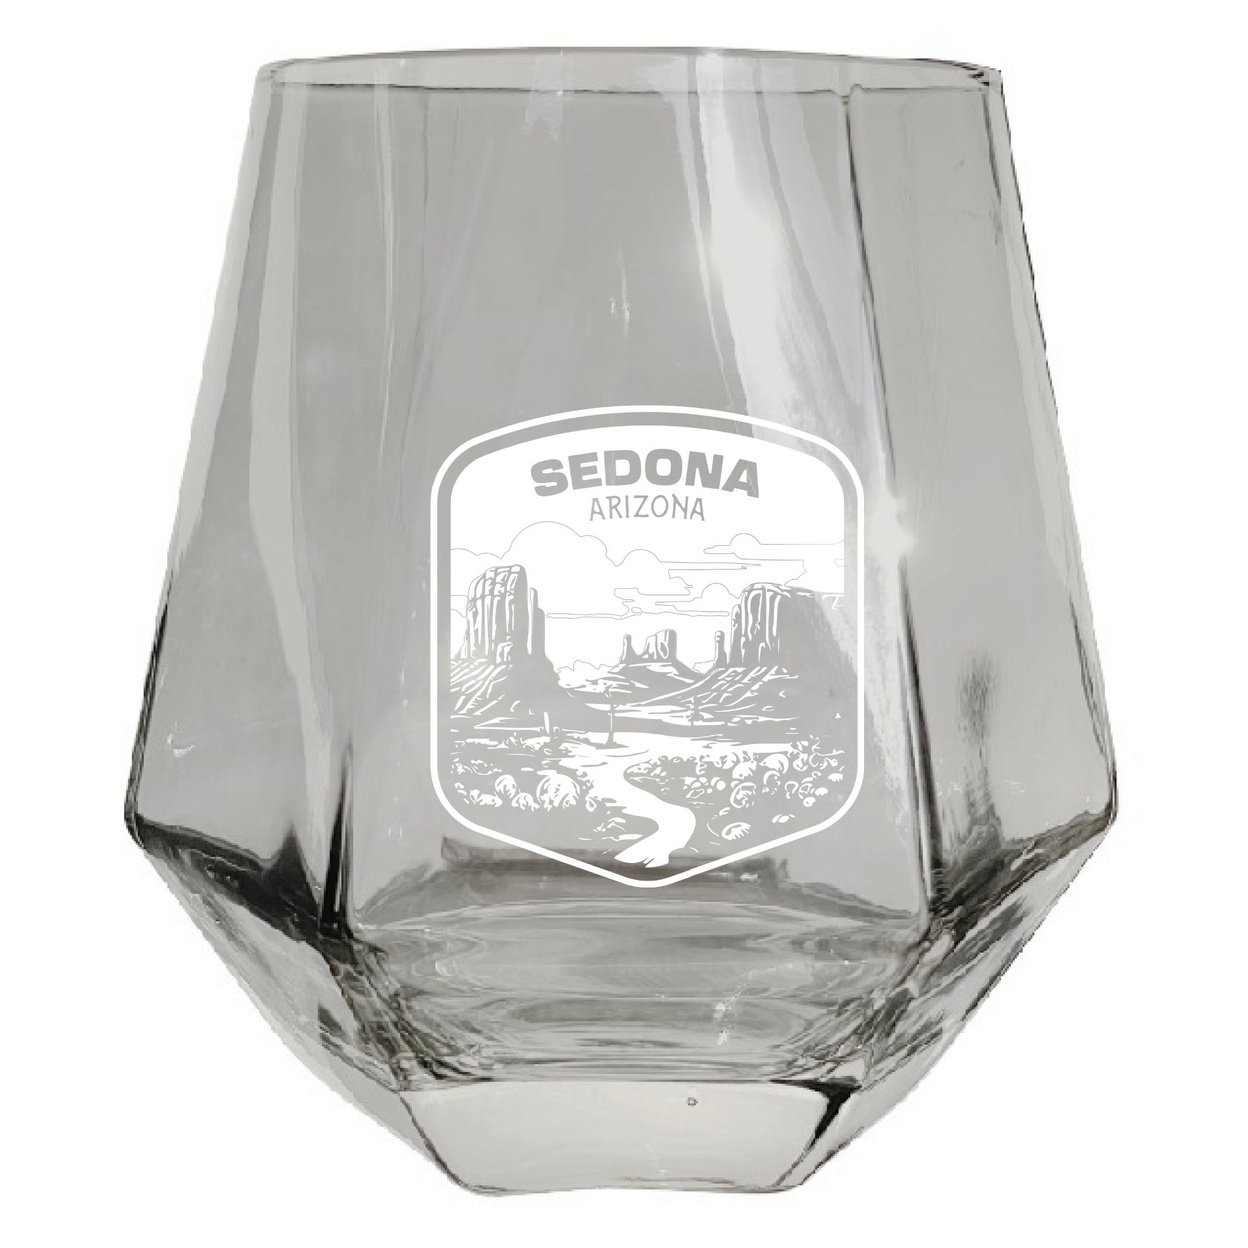 Sedona Arizona Souvenir Wine Glass EngravedDiamond 15 Oz Clear Iridescent - Clear,,2-Pack